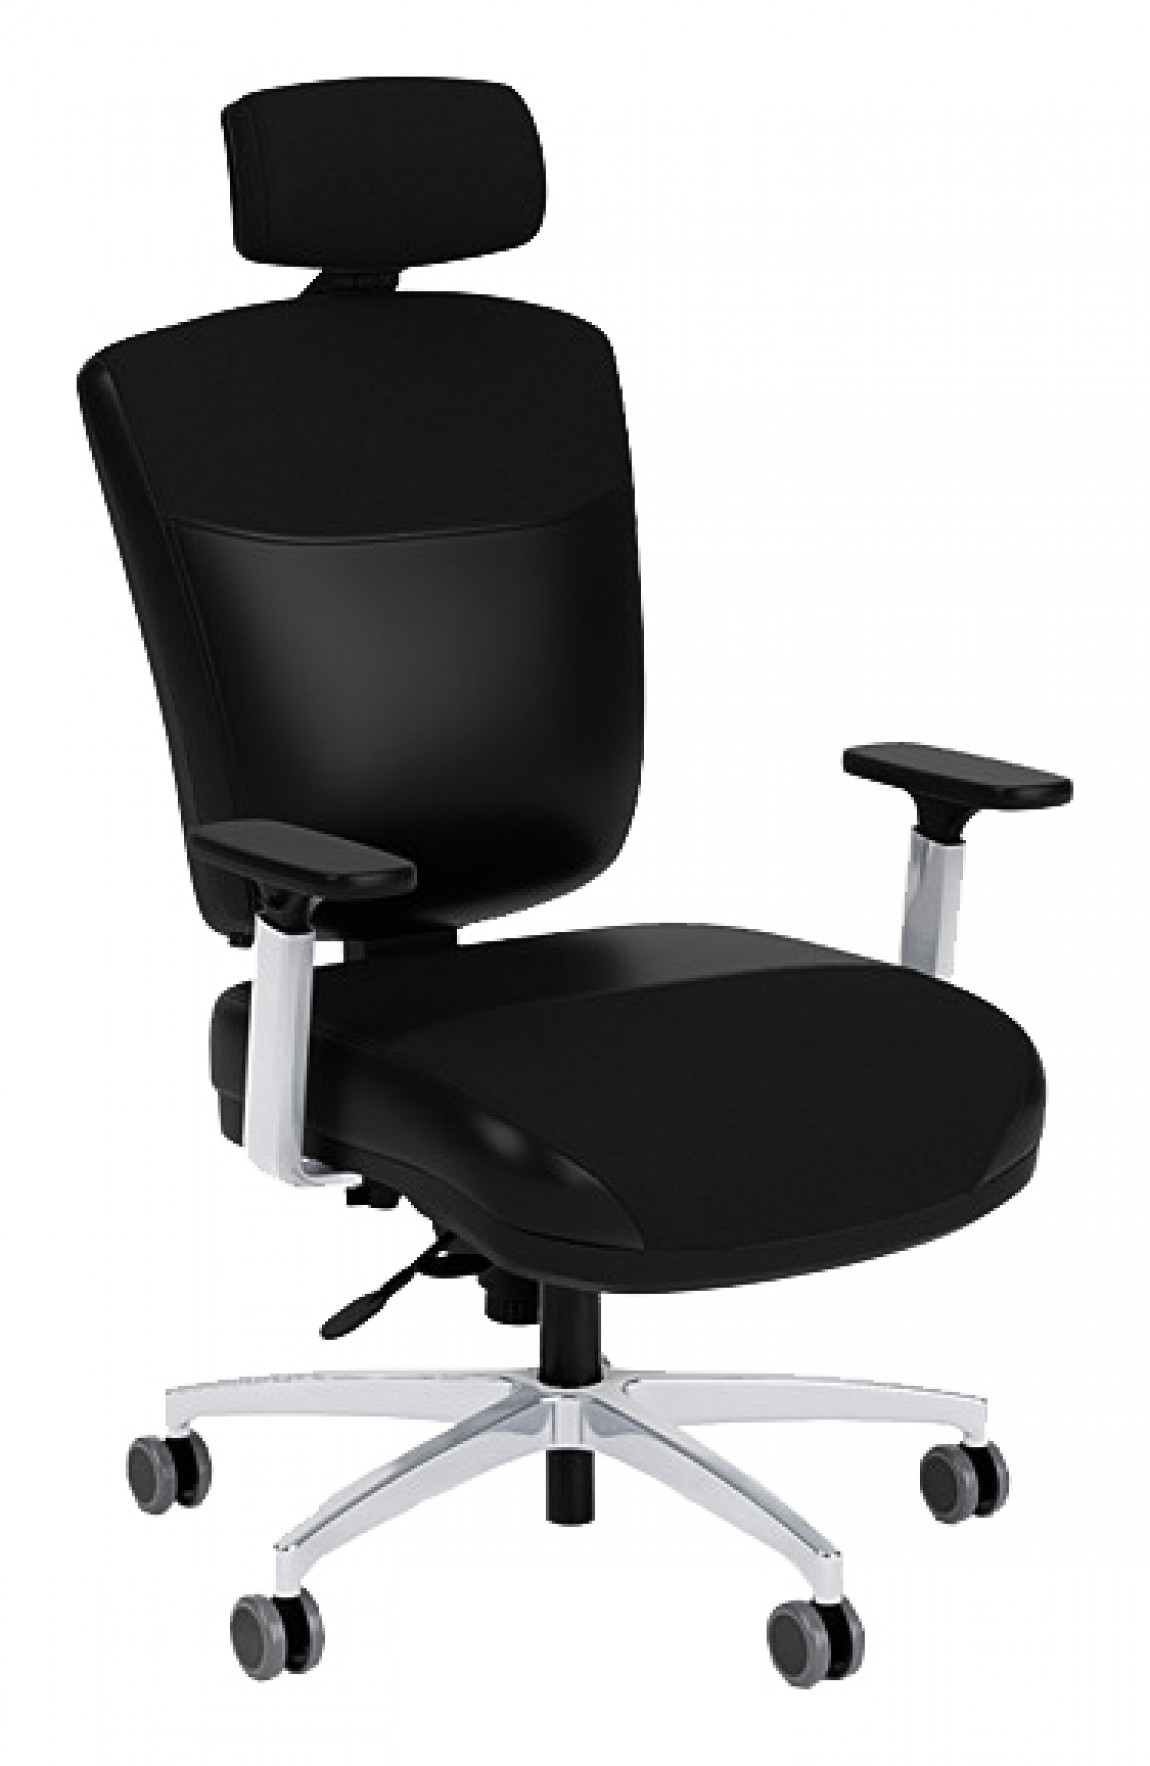 Ergonomic Office Chair with Headrest